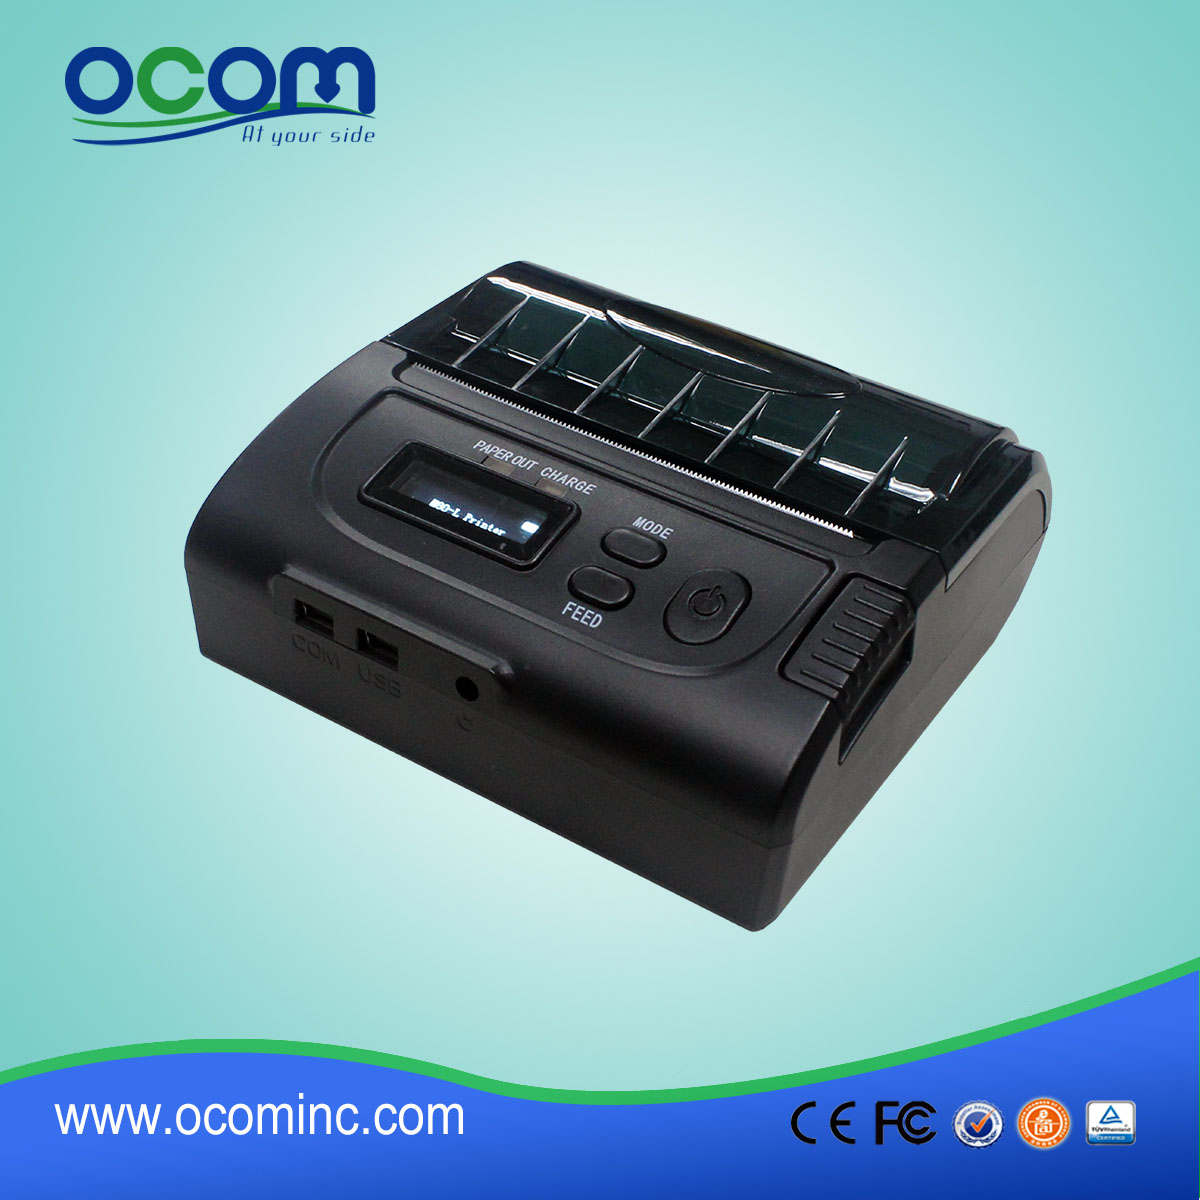 OCPP-M083 80мм WIFI Bluetooth Портативный термопринтер